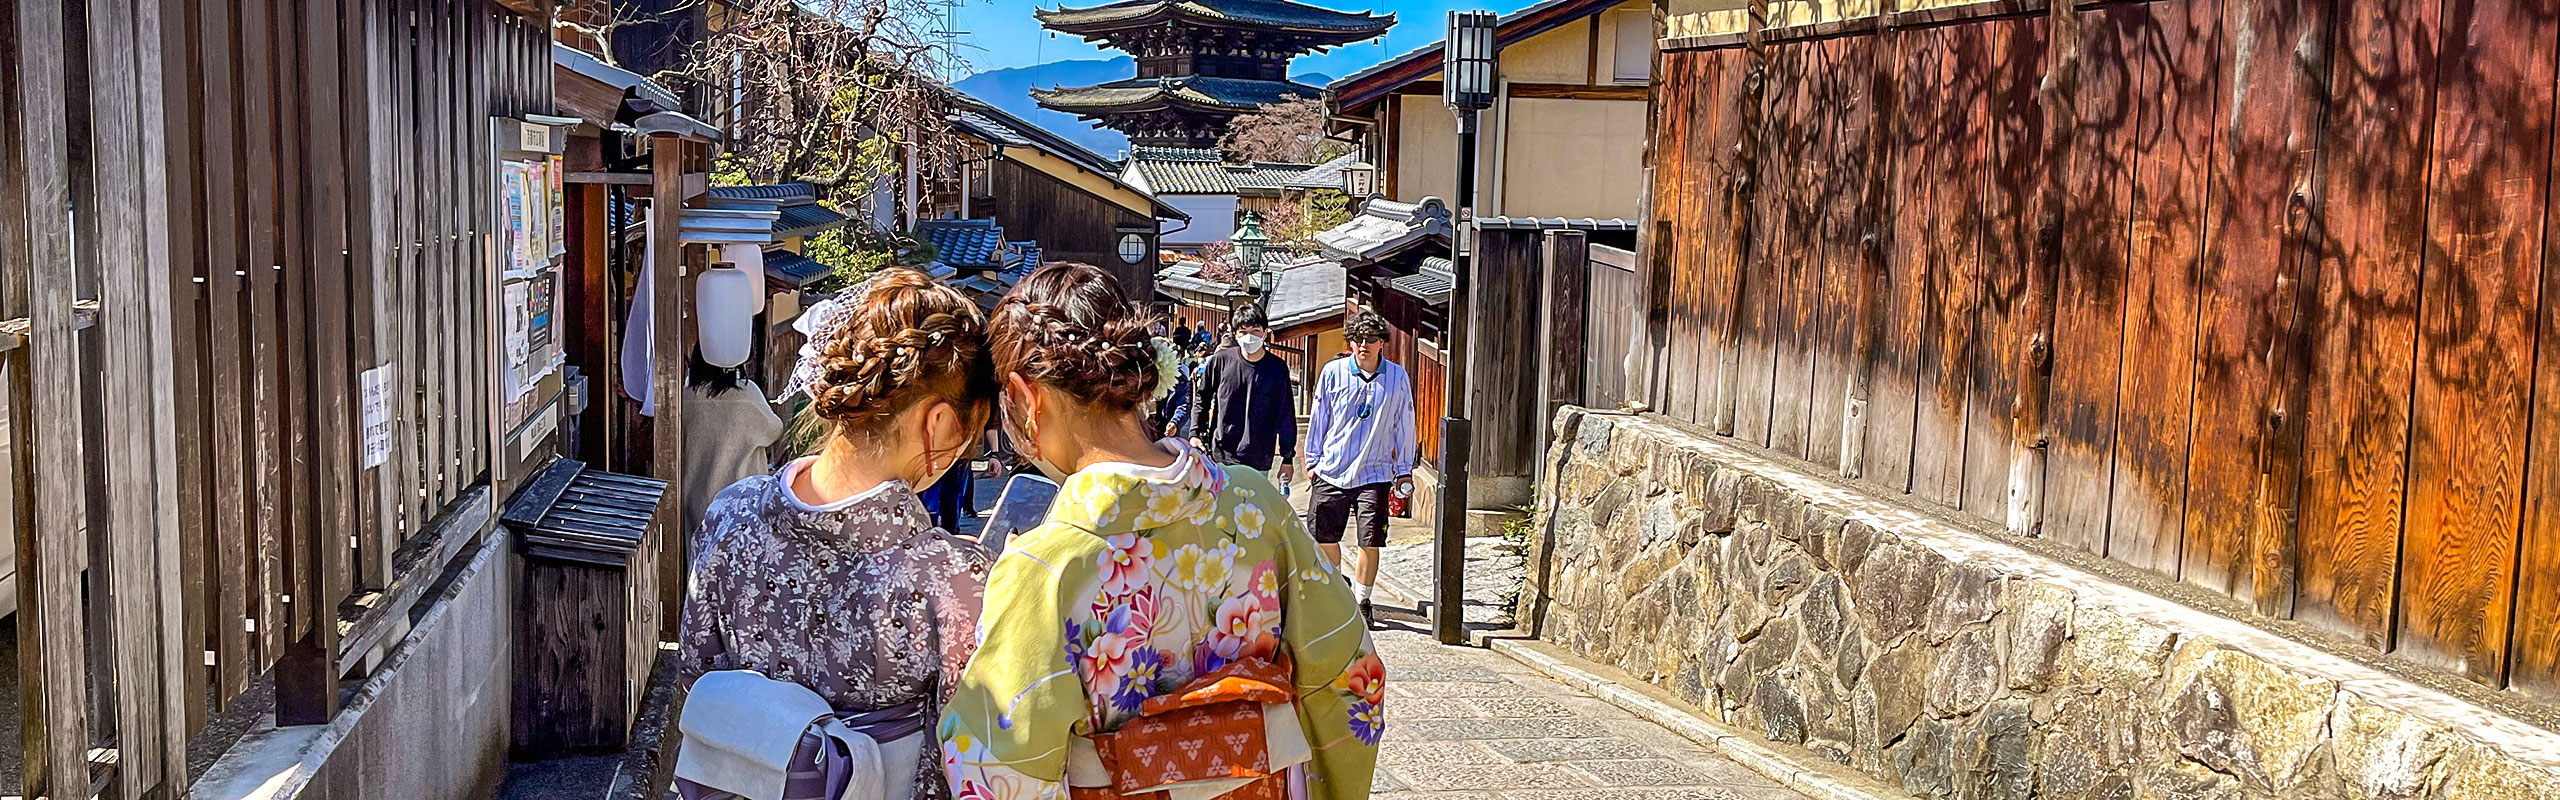 Japanese People in Kimono